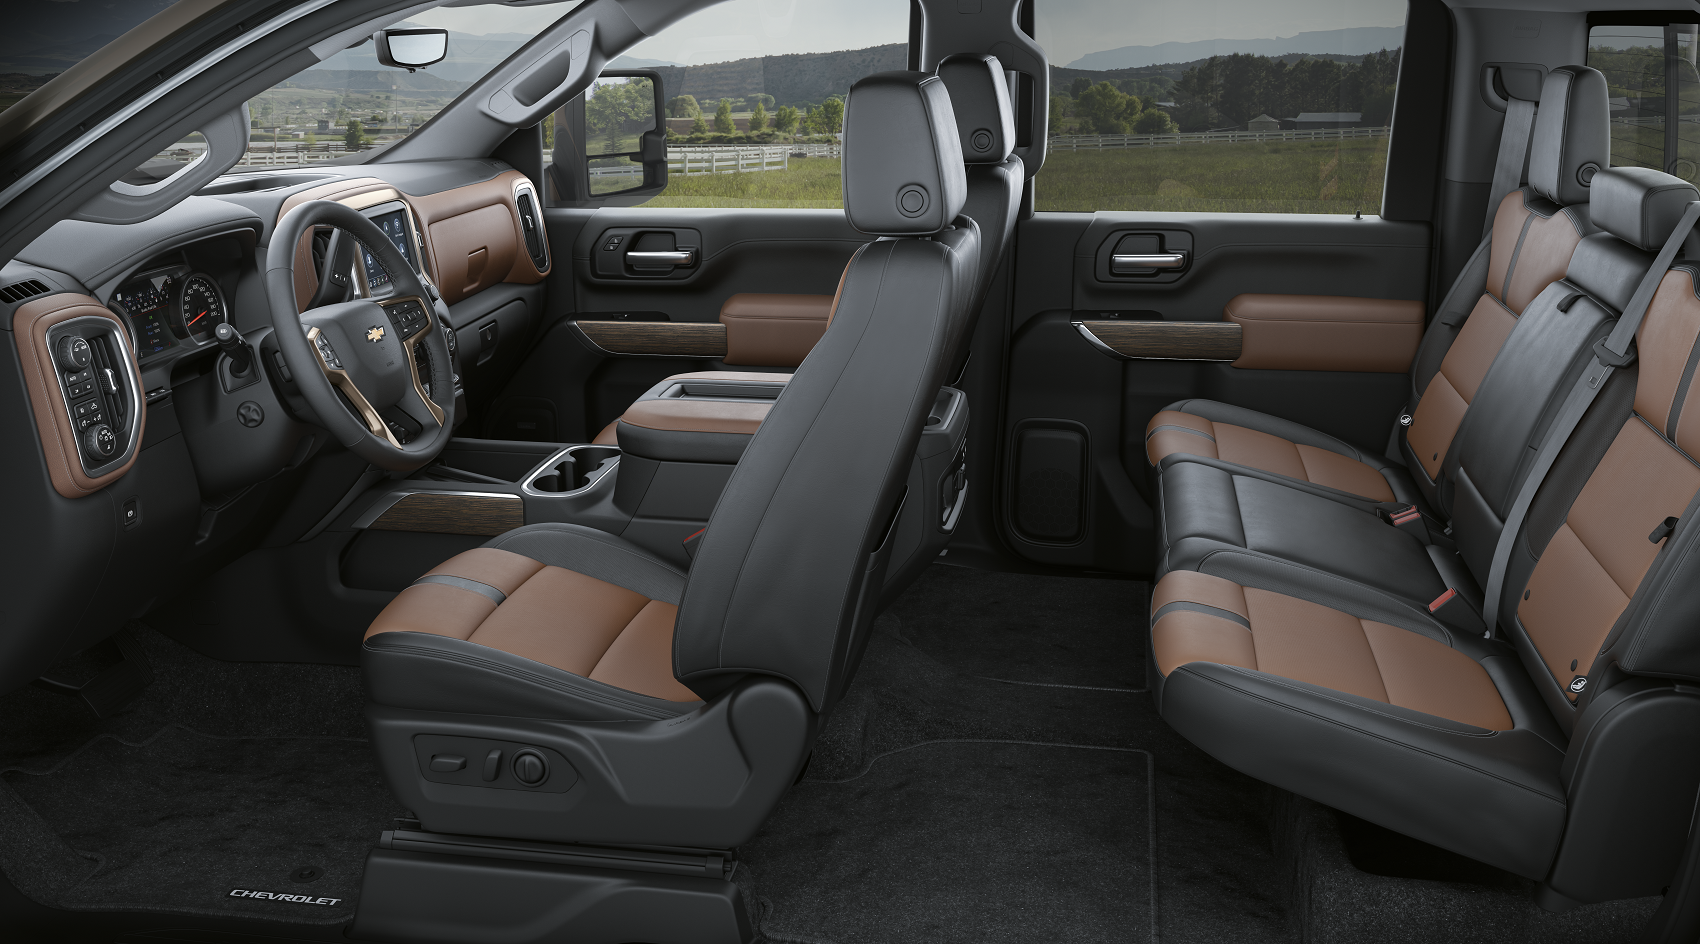 2021 Chevy Silverado 2500 black and brown leather interior